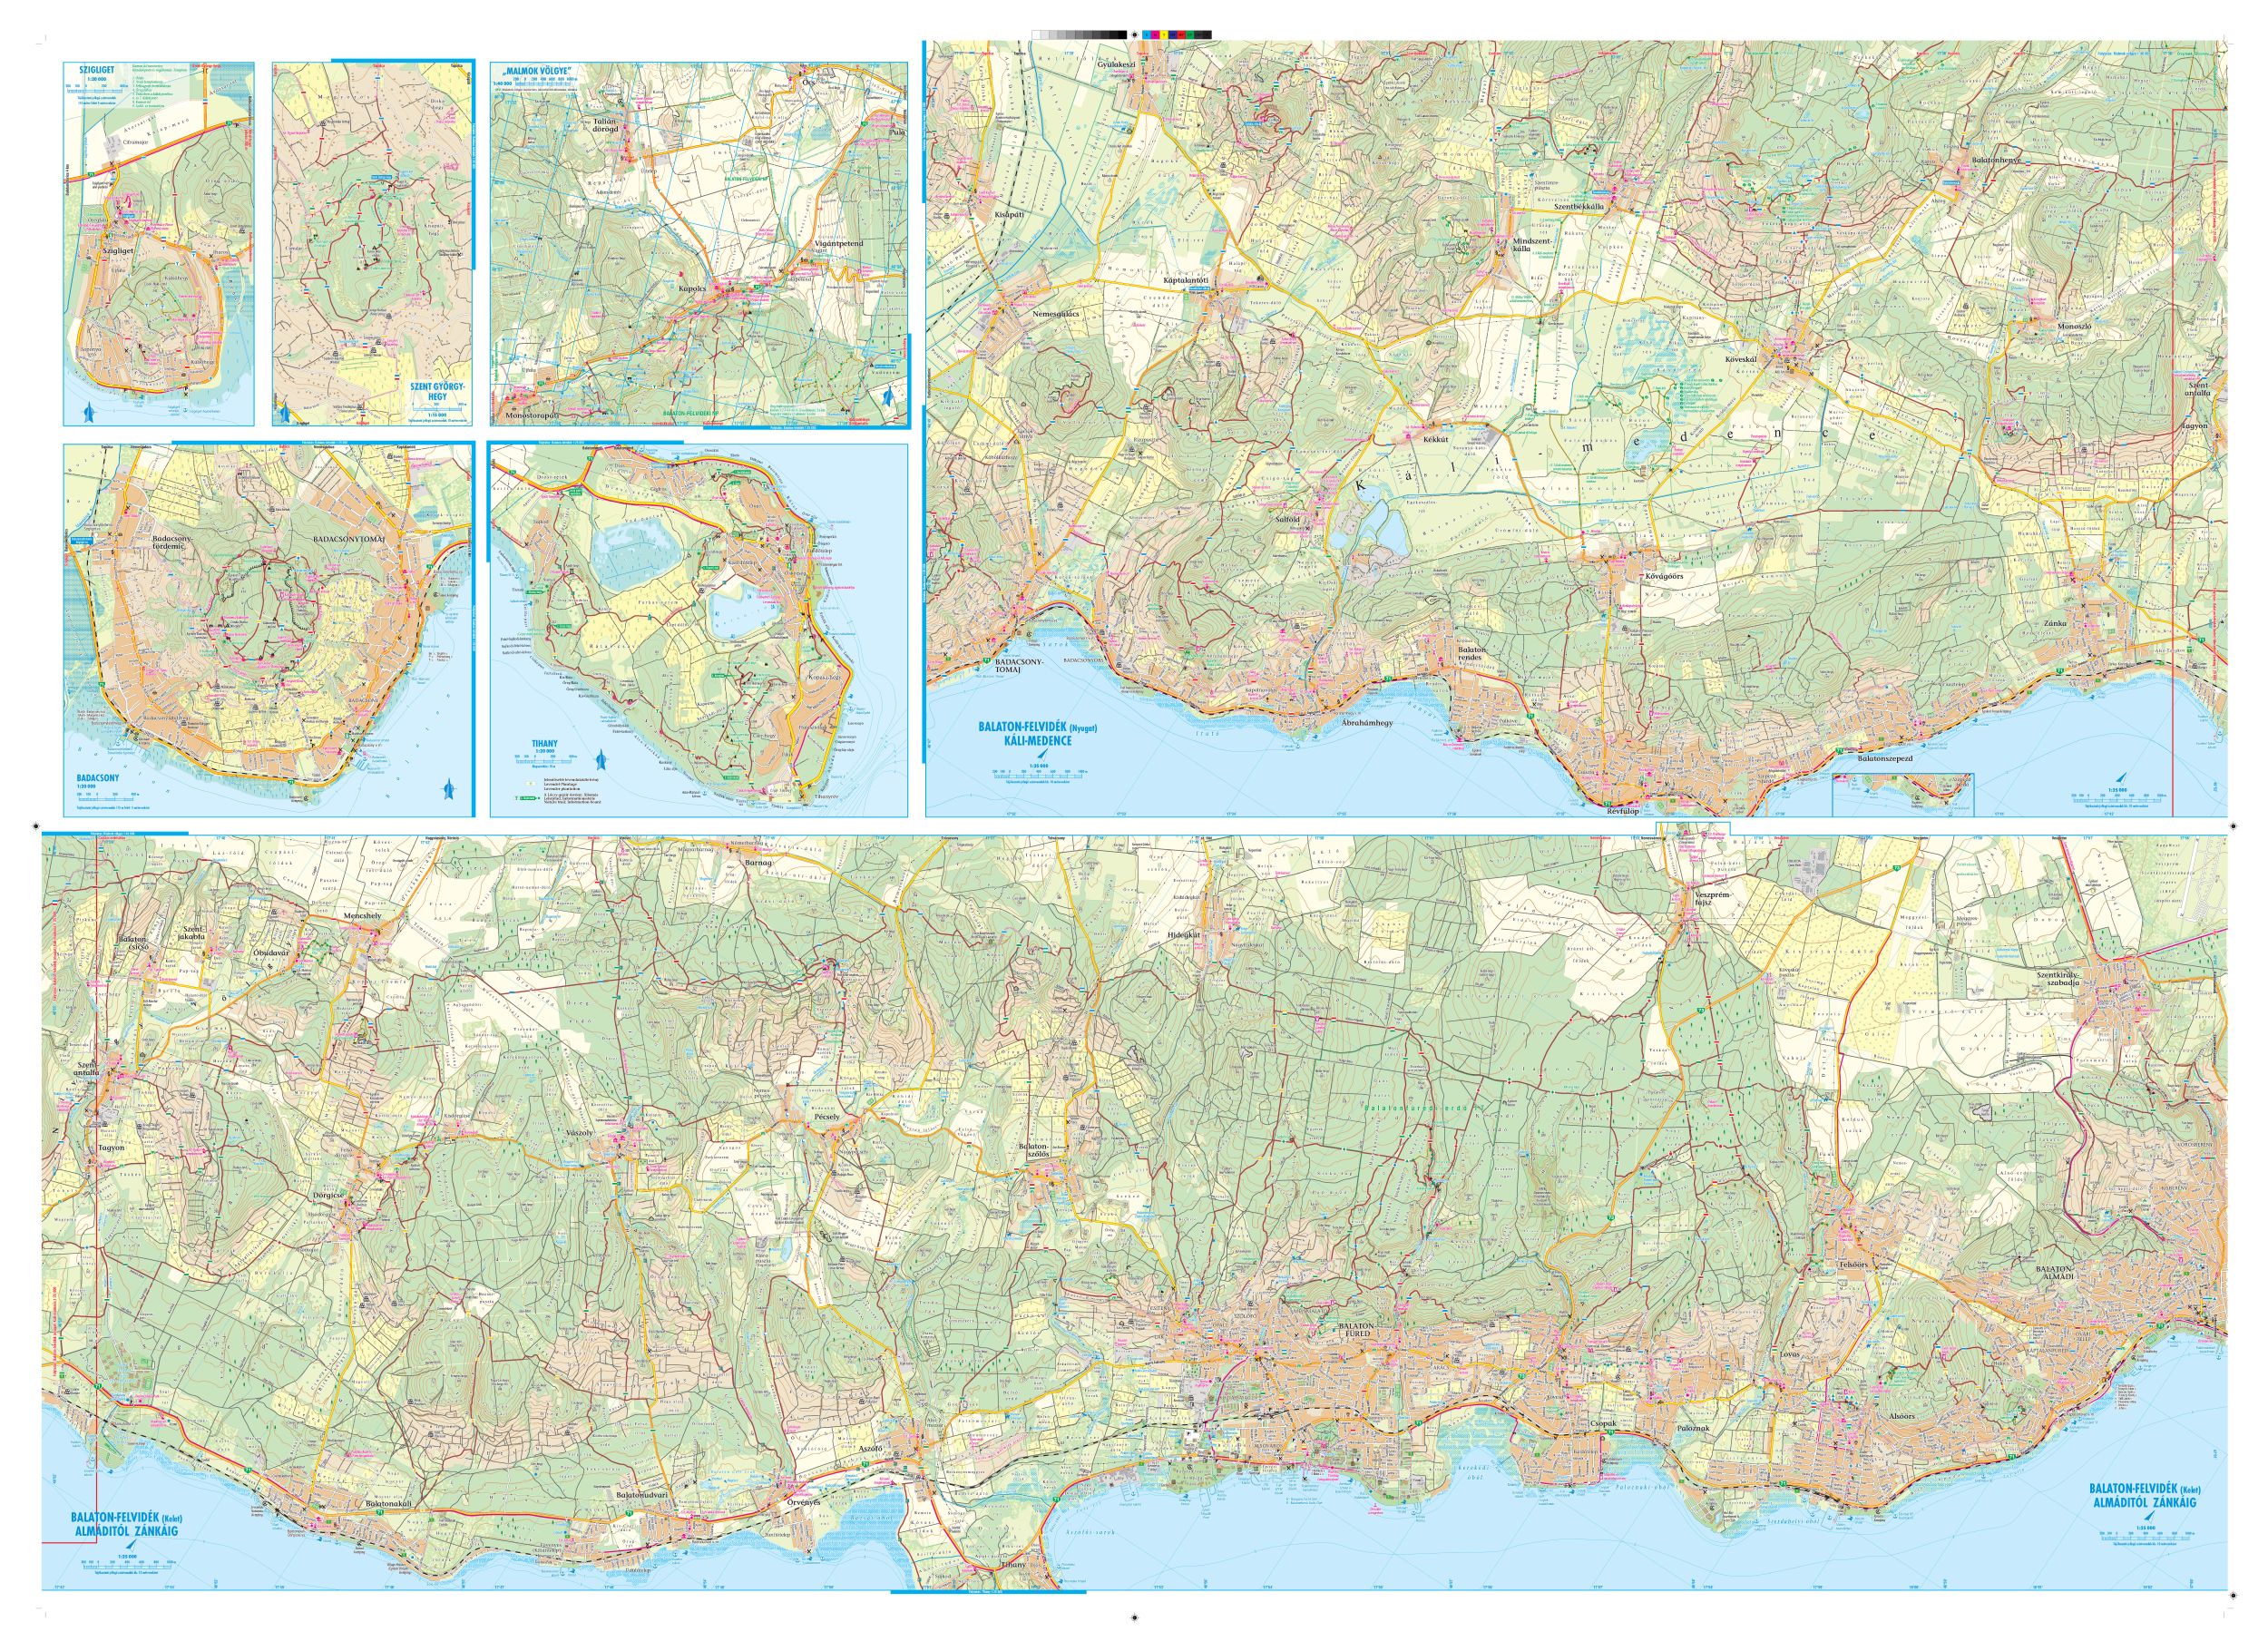 Balaton Uplands overview map